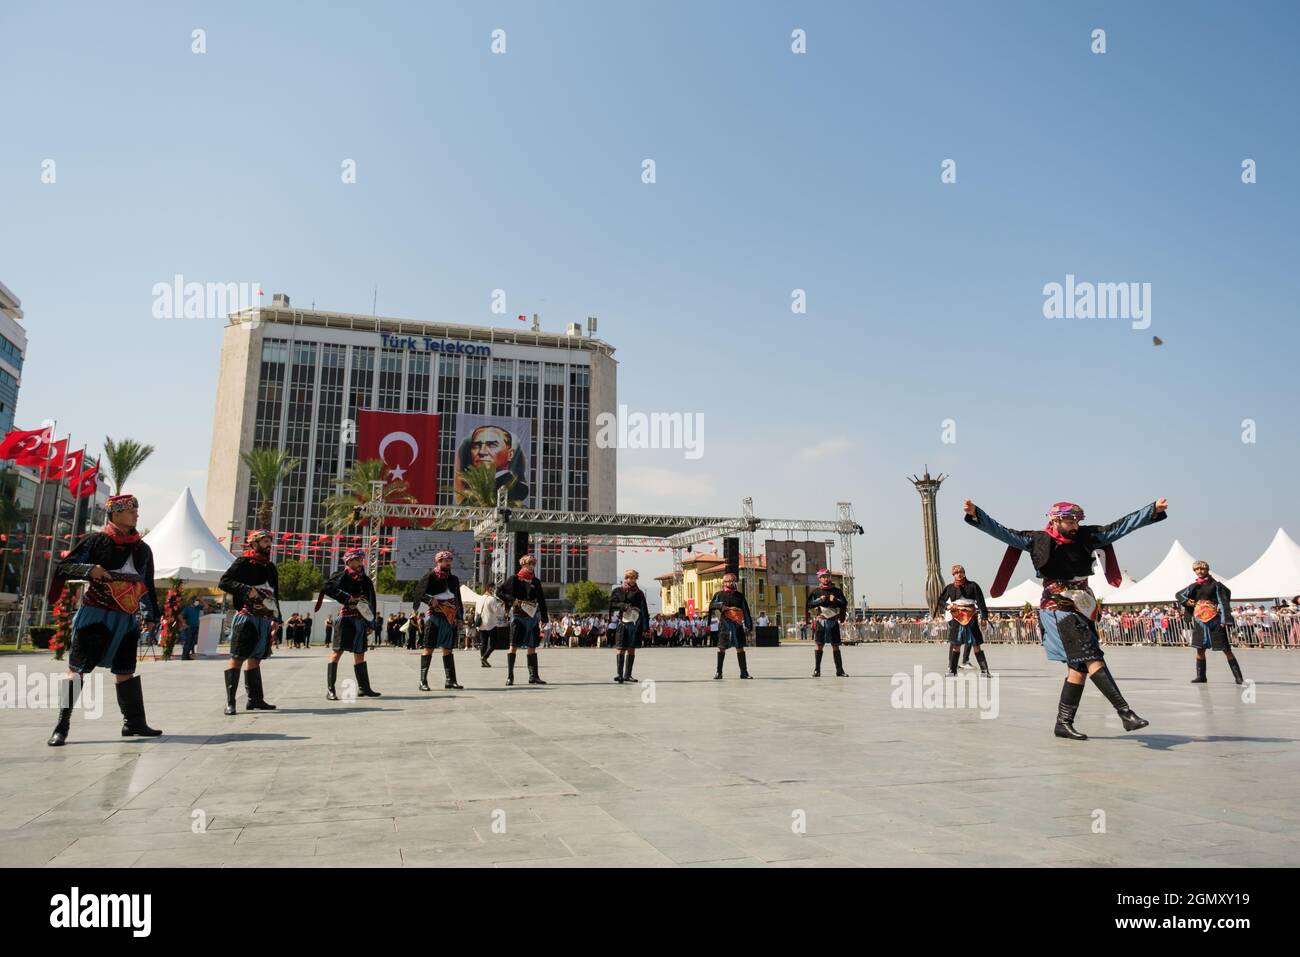 Izmir, Turkey - September 9, 2021: People performing Zeybek dance on the liberty day of Izmir at the Republic Square in Izmir. Stock Photo